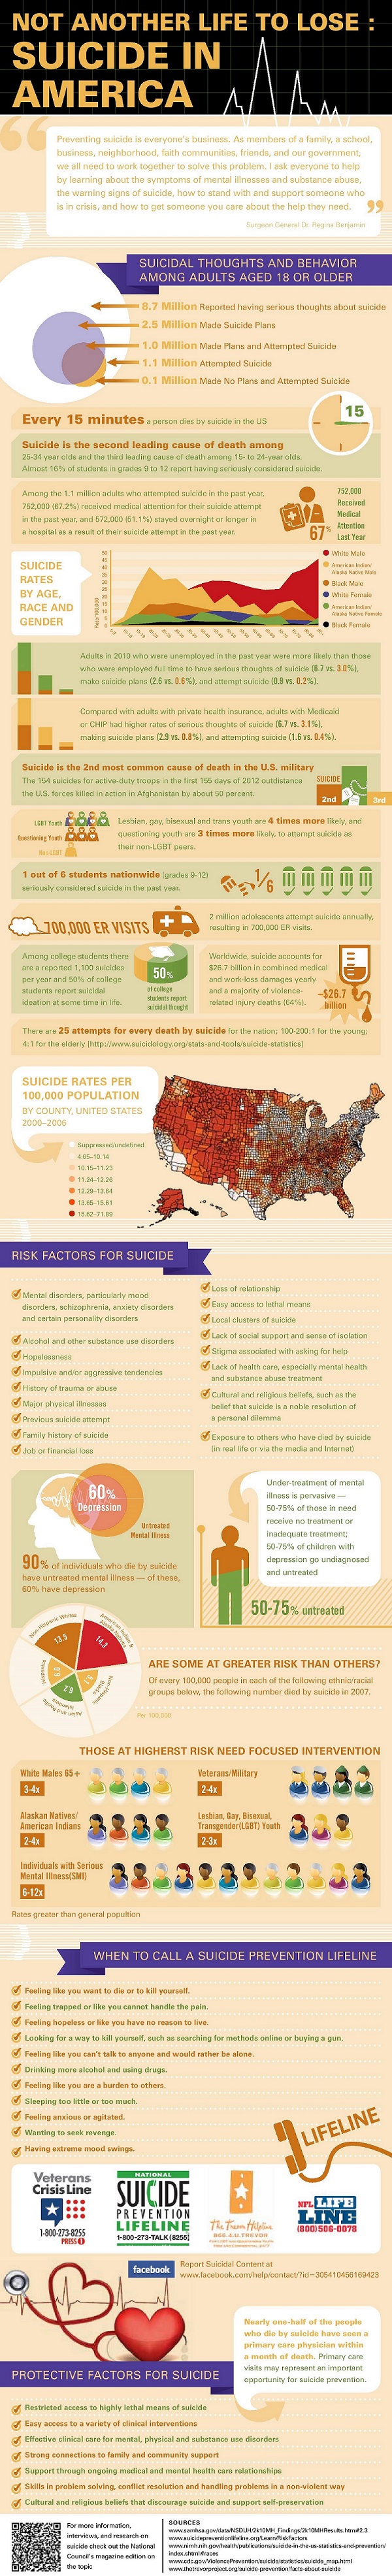 suicide-infographic-pdf-www-ok-gov-1-page-001